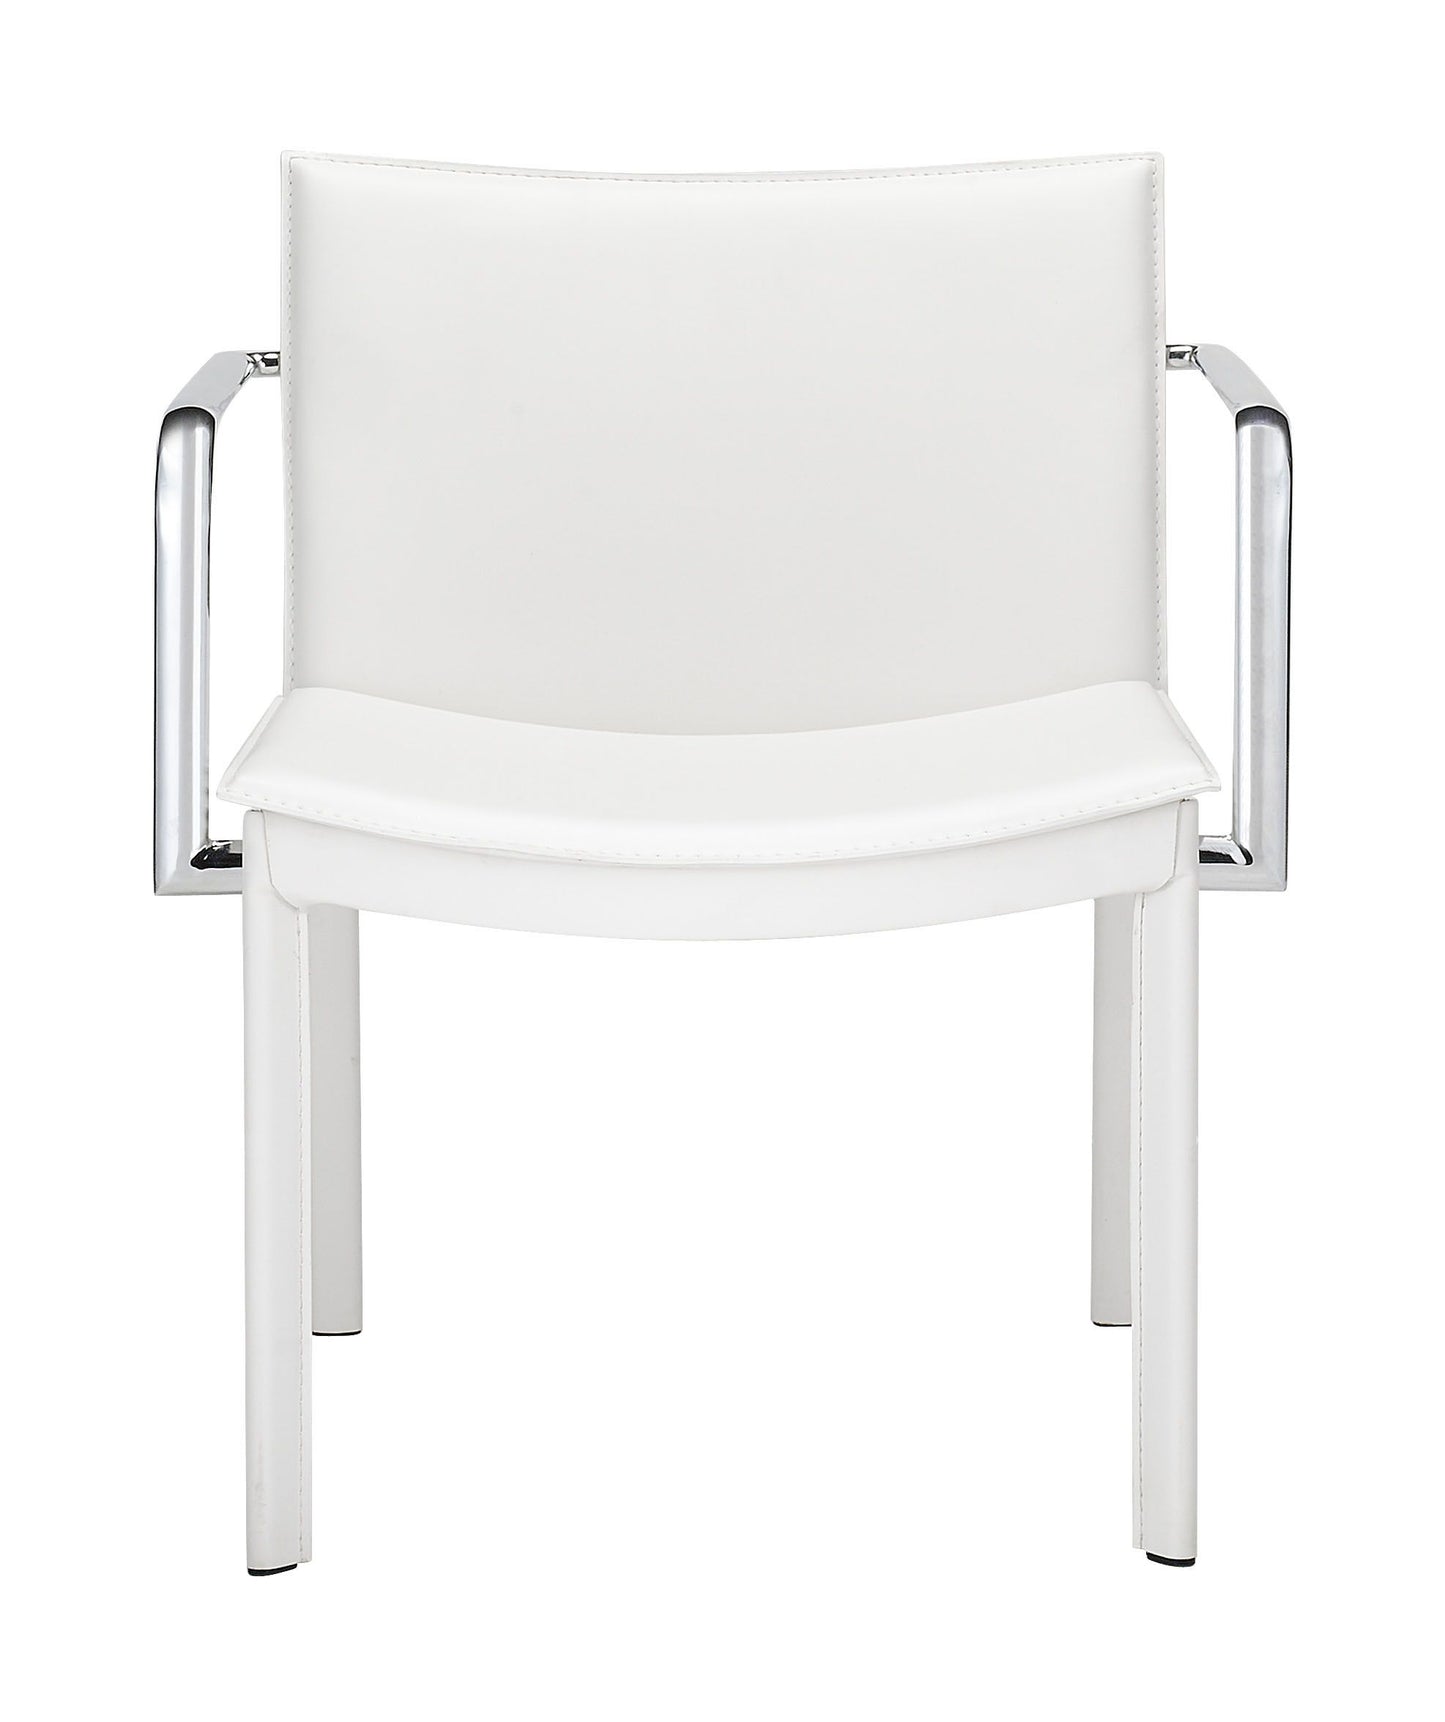 Gekko Conference Chair White